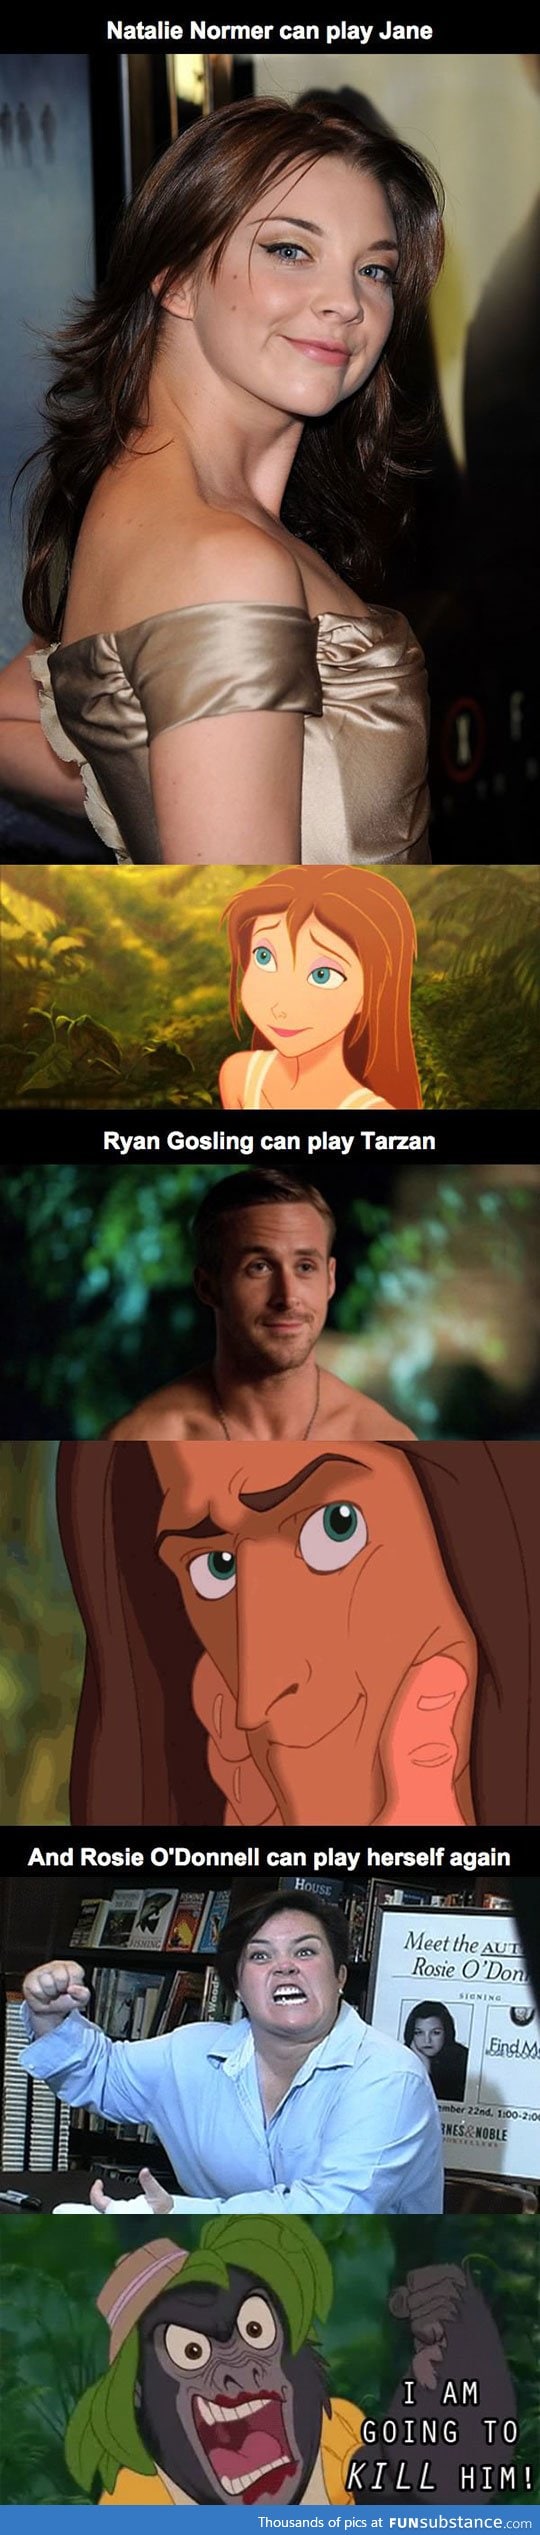 Disney's Tarzan Perfect Casting